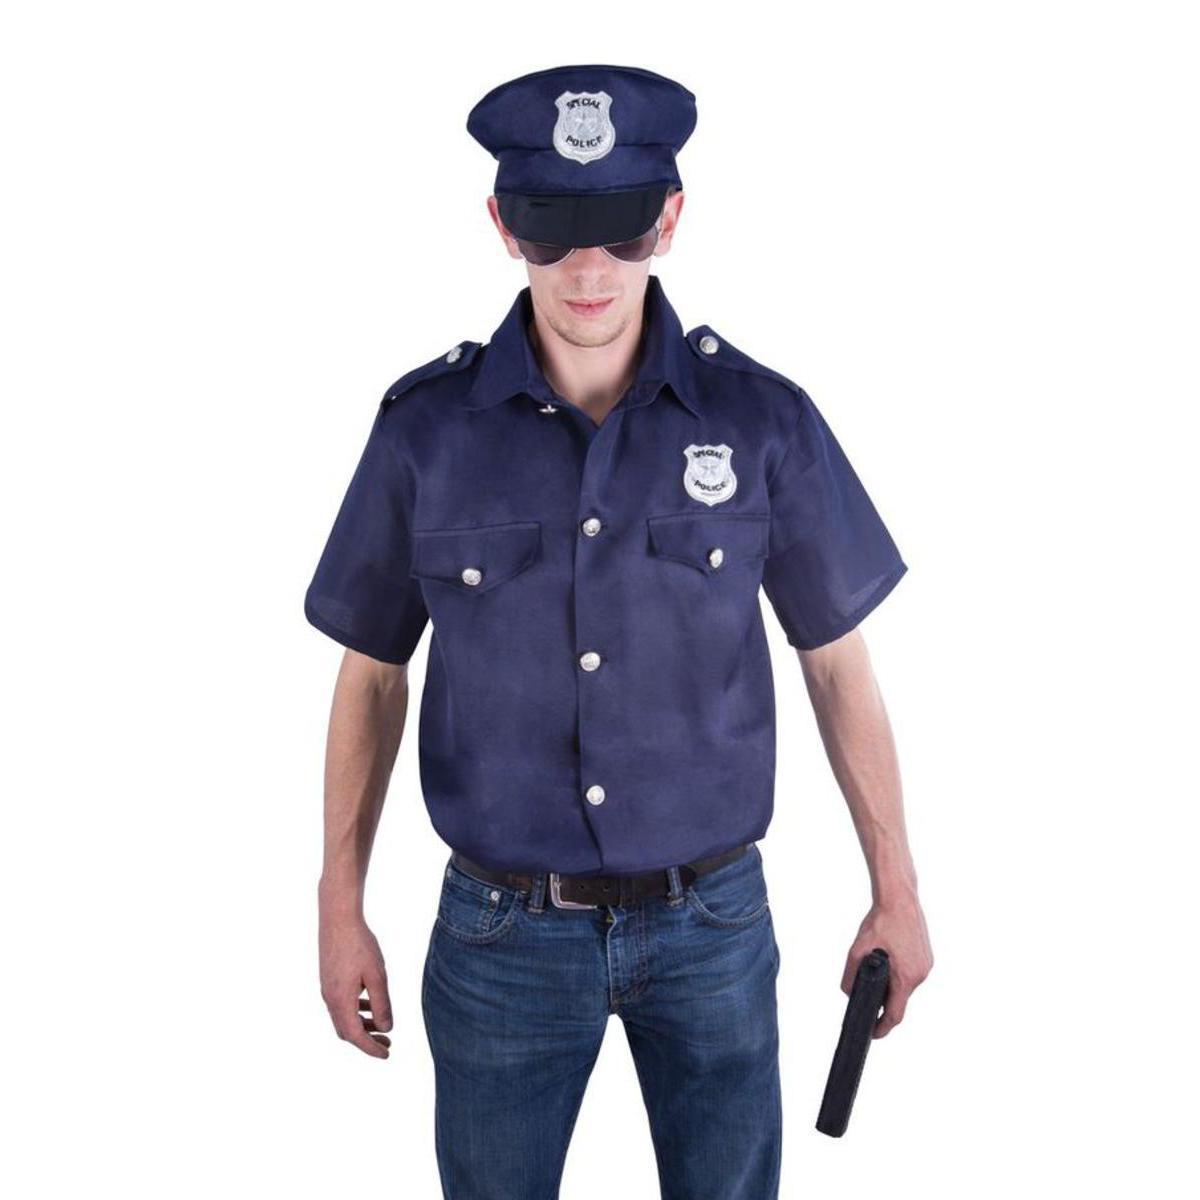 Costume adulte luxe policier en polyester - Taille unique - Multicolore